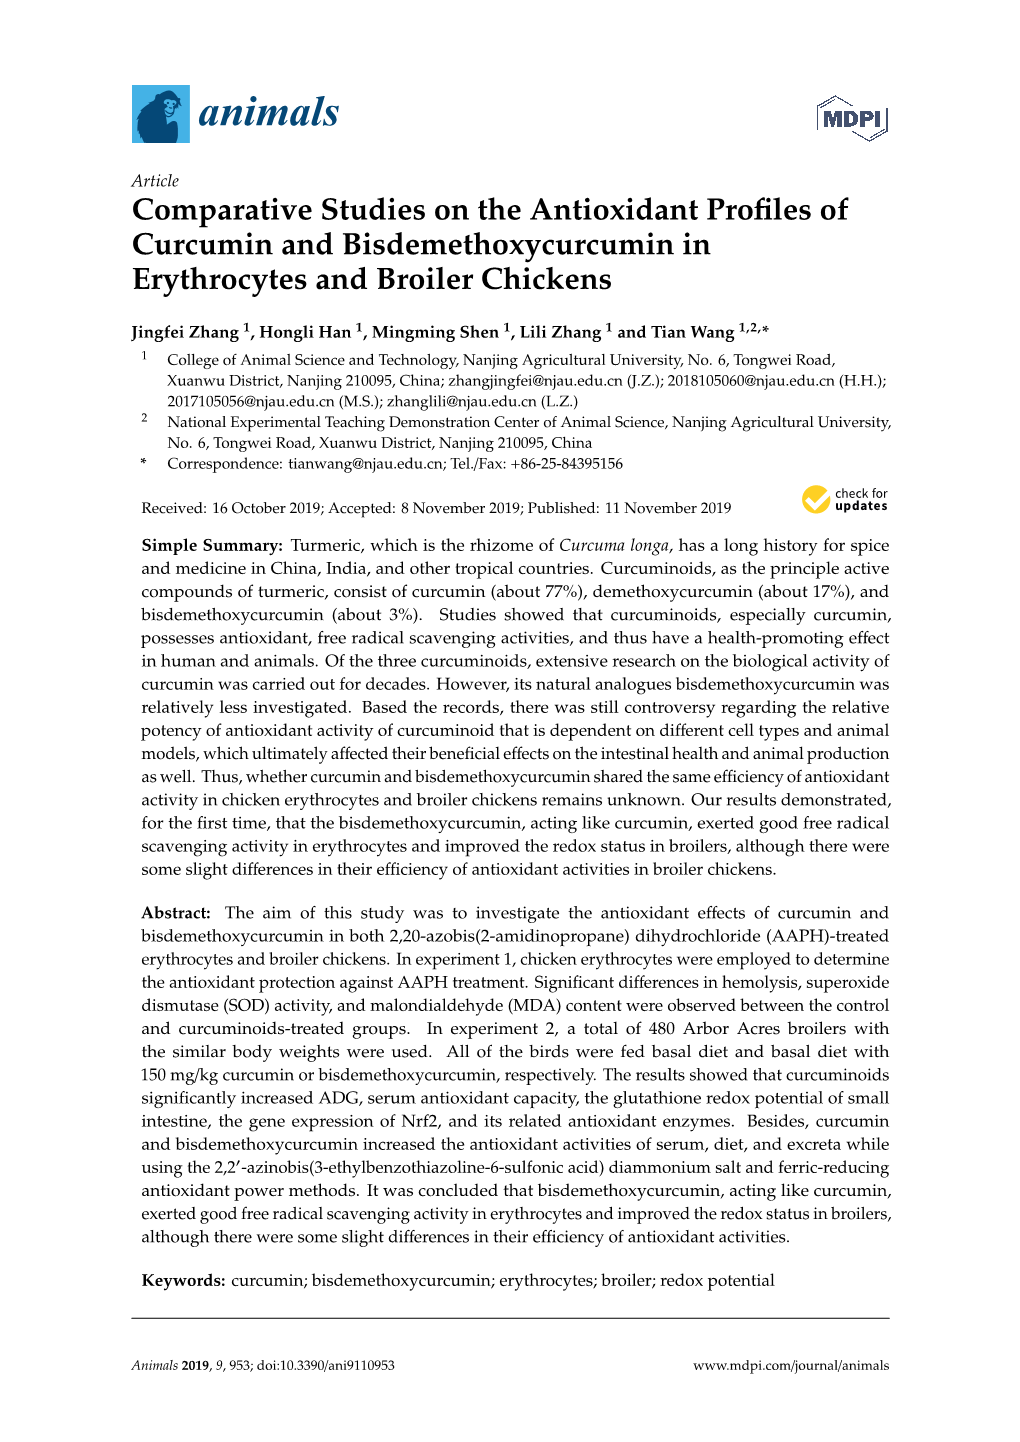 Comparative Studies on the Antioxidant Profiles of Curcumin